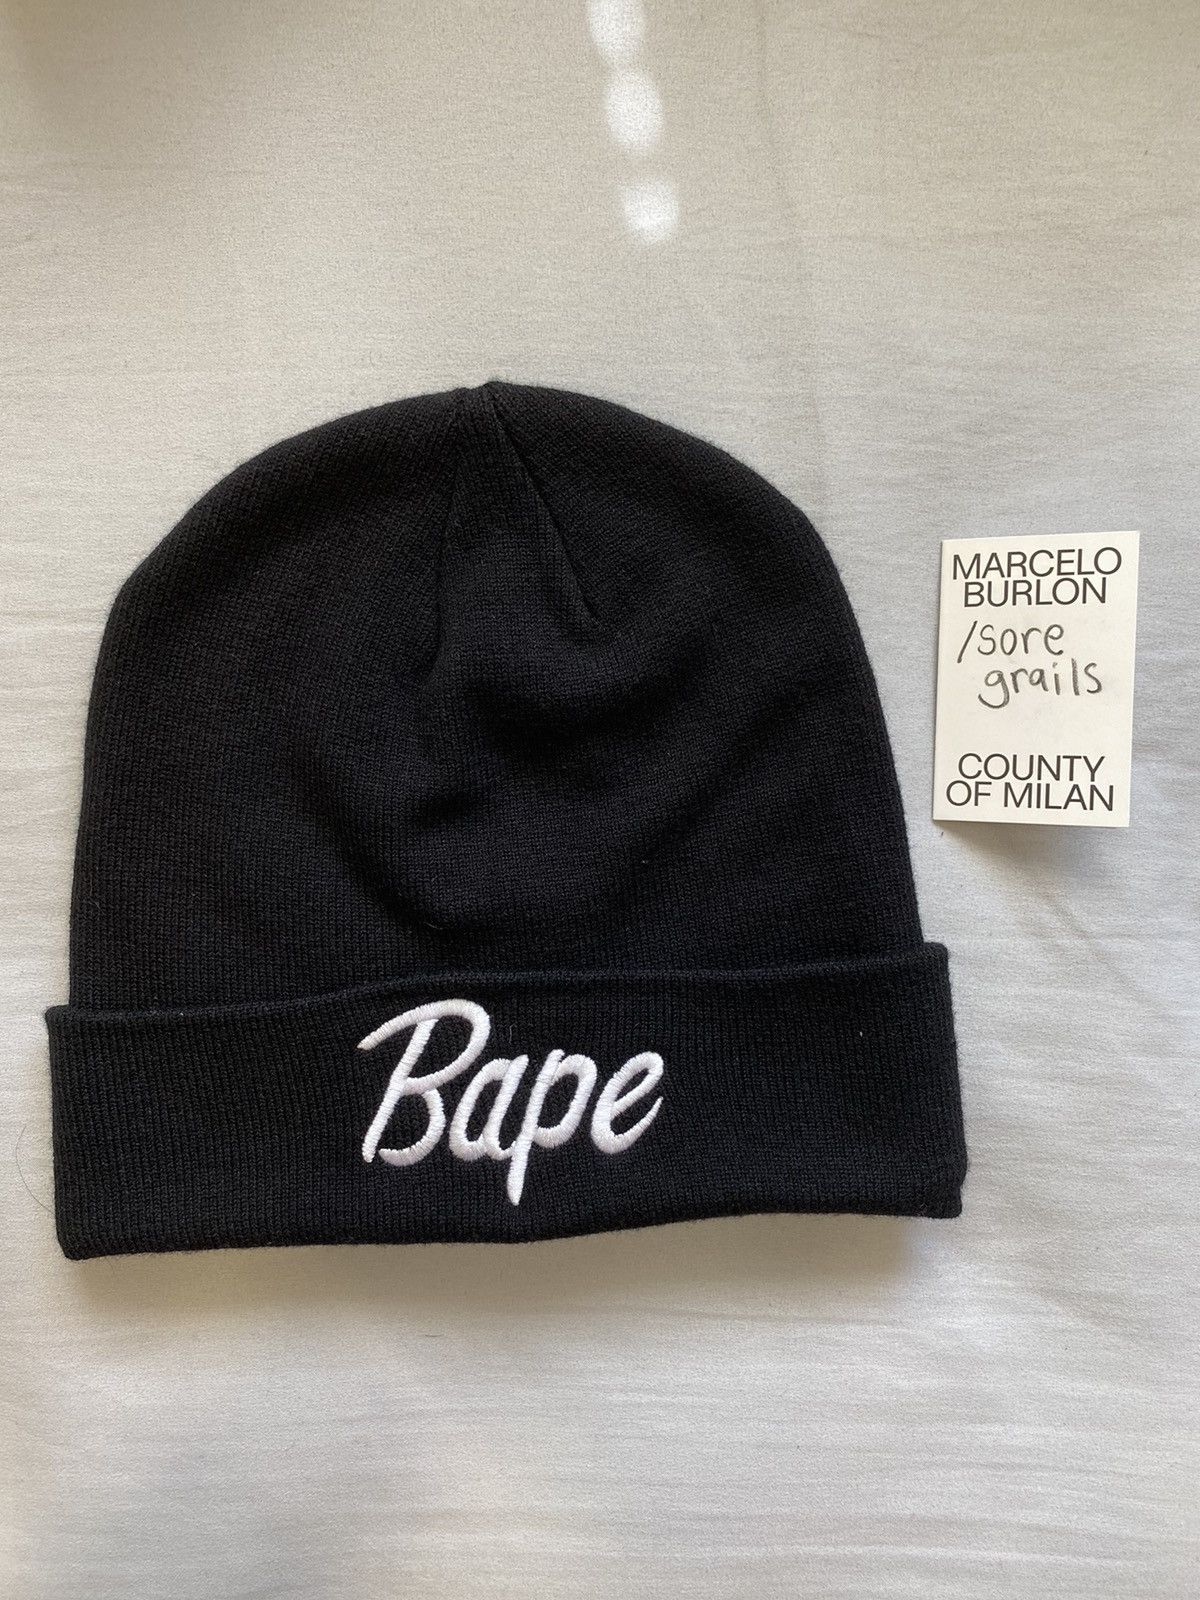 Bape BAPE Cursive beanie | Grailed